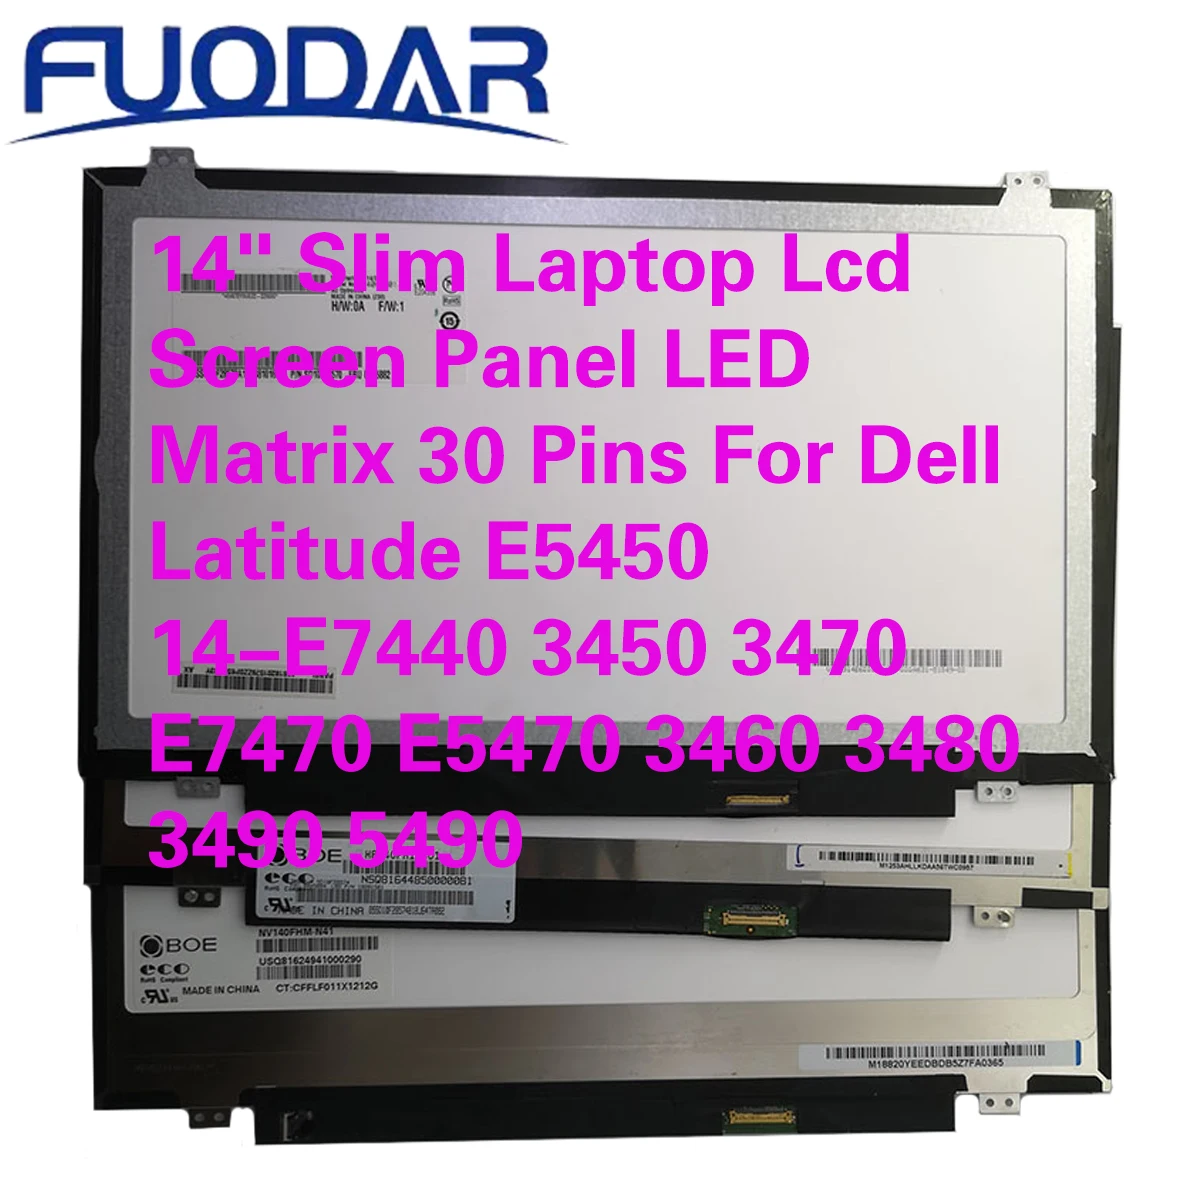 

14" Slim Laptop Lcd Screen Panel LED Matrix 30 Pins For Dell Latitude E5450 14-E7440 3450 3470 E7470 E5470 3460 3480 3490 5490